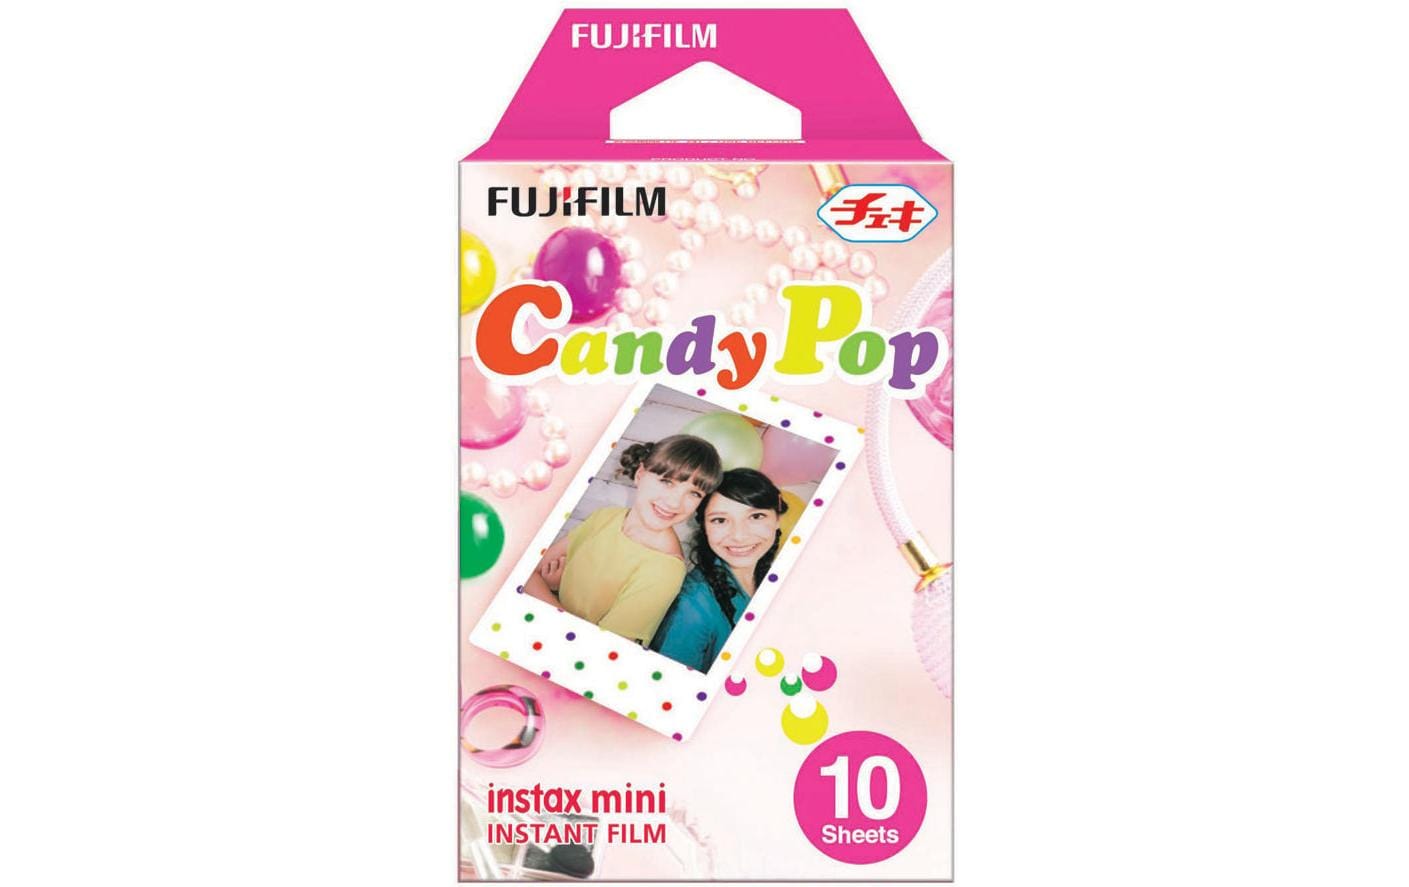 Fujifilm Sofortbildfilm Instax Mini Candy pop 10 Blatt